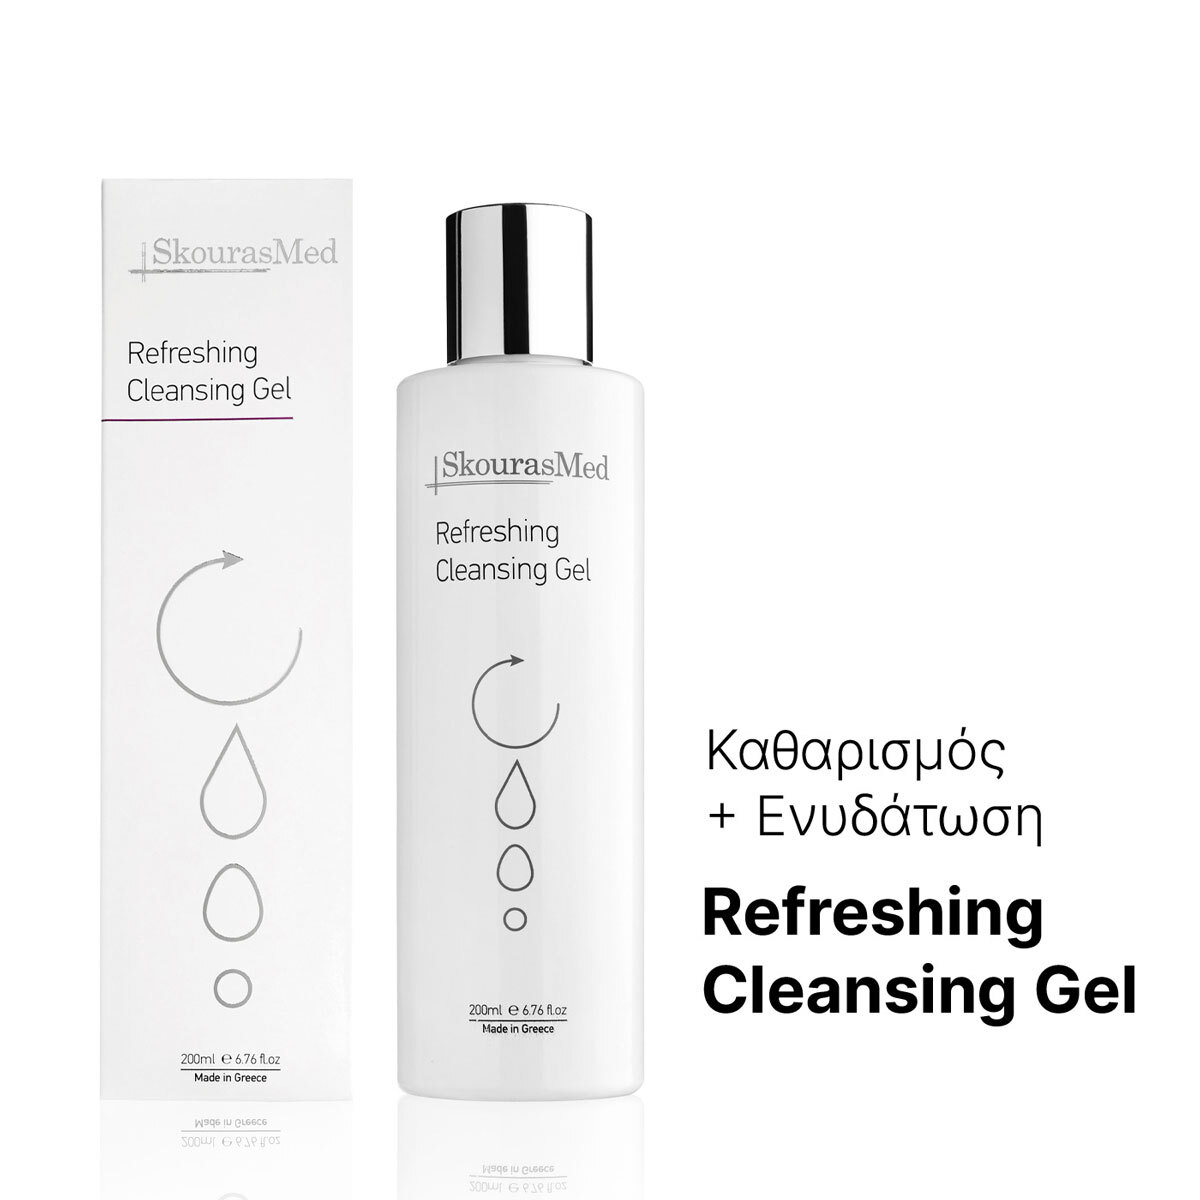 SkourasMed Refreshing Cleansing Gel